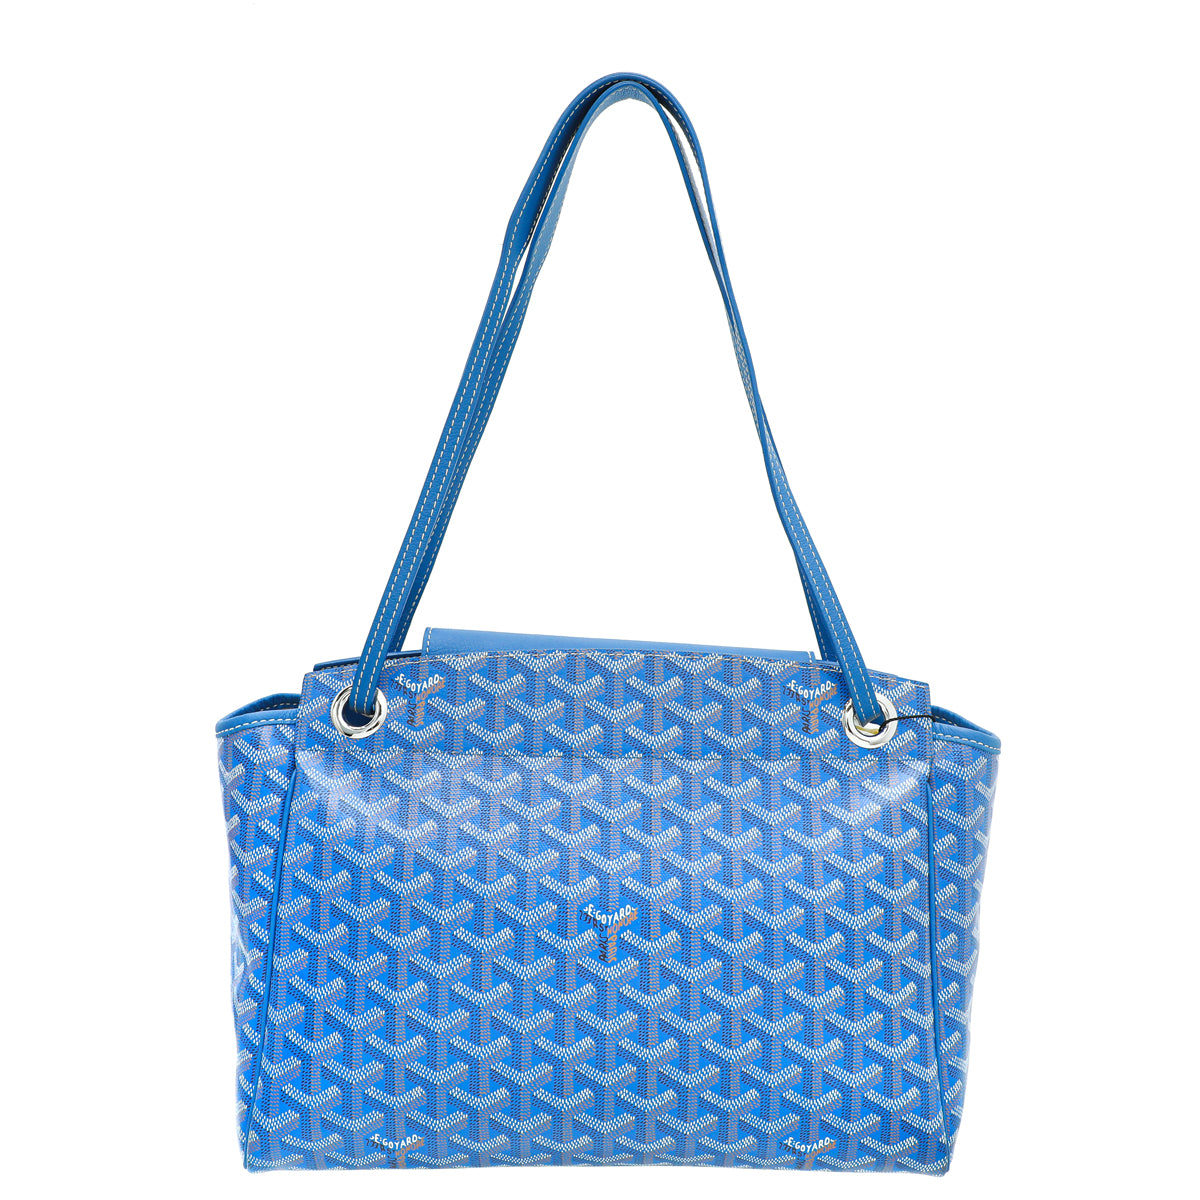 Goyard blue backpack detail pic : r/hlinjewell